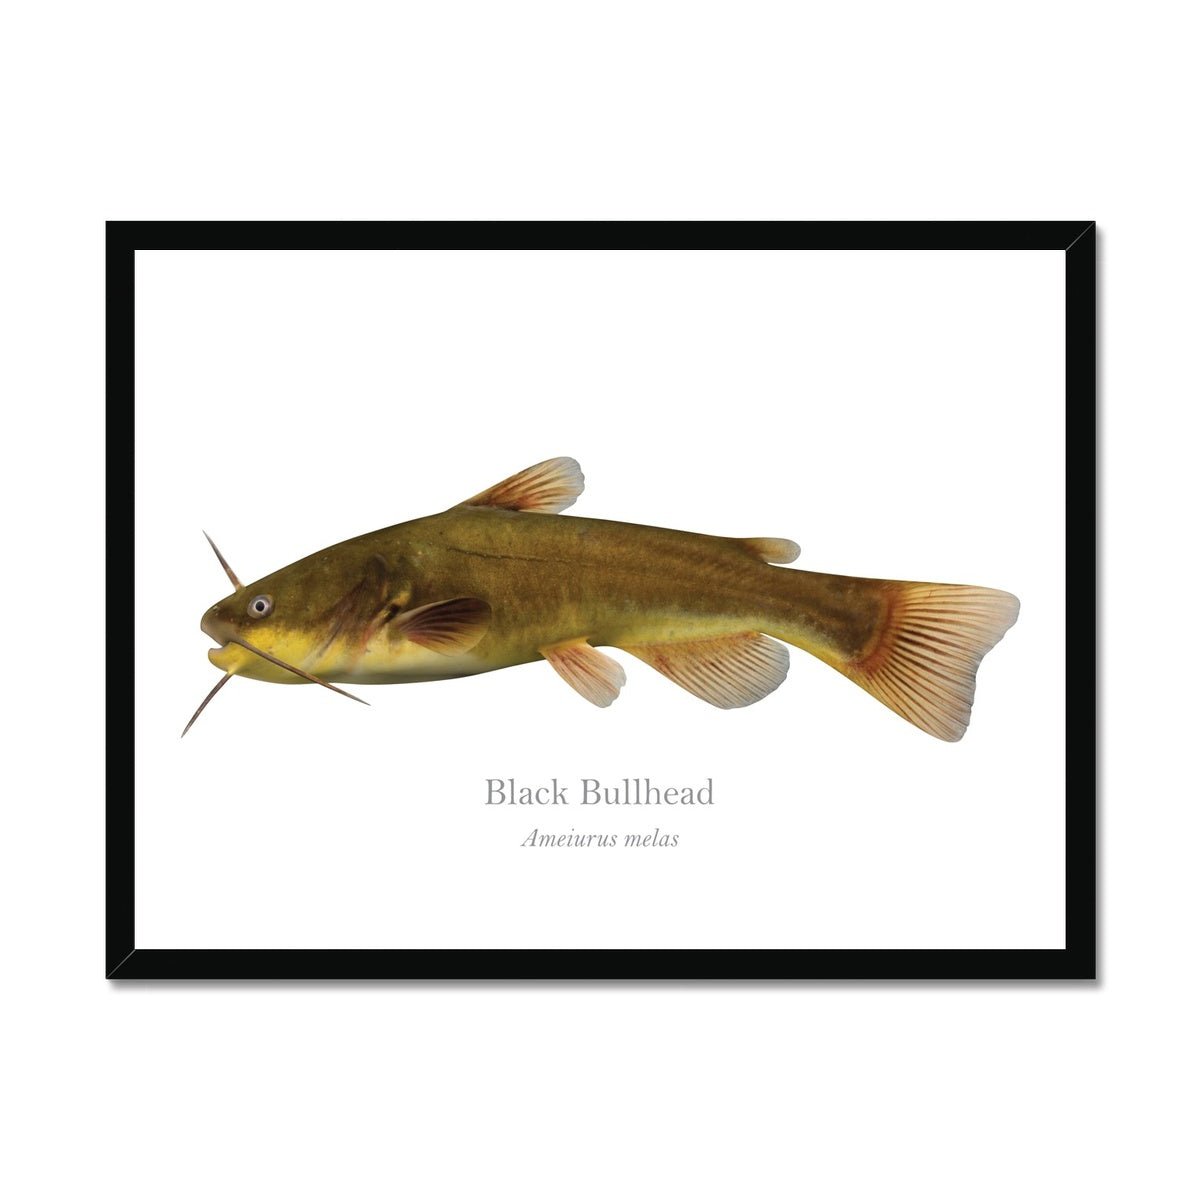 Black Bullhead - Framed Print - With Scientific Name - madfishlab.com